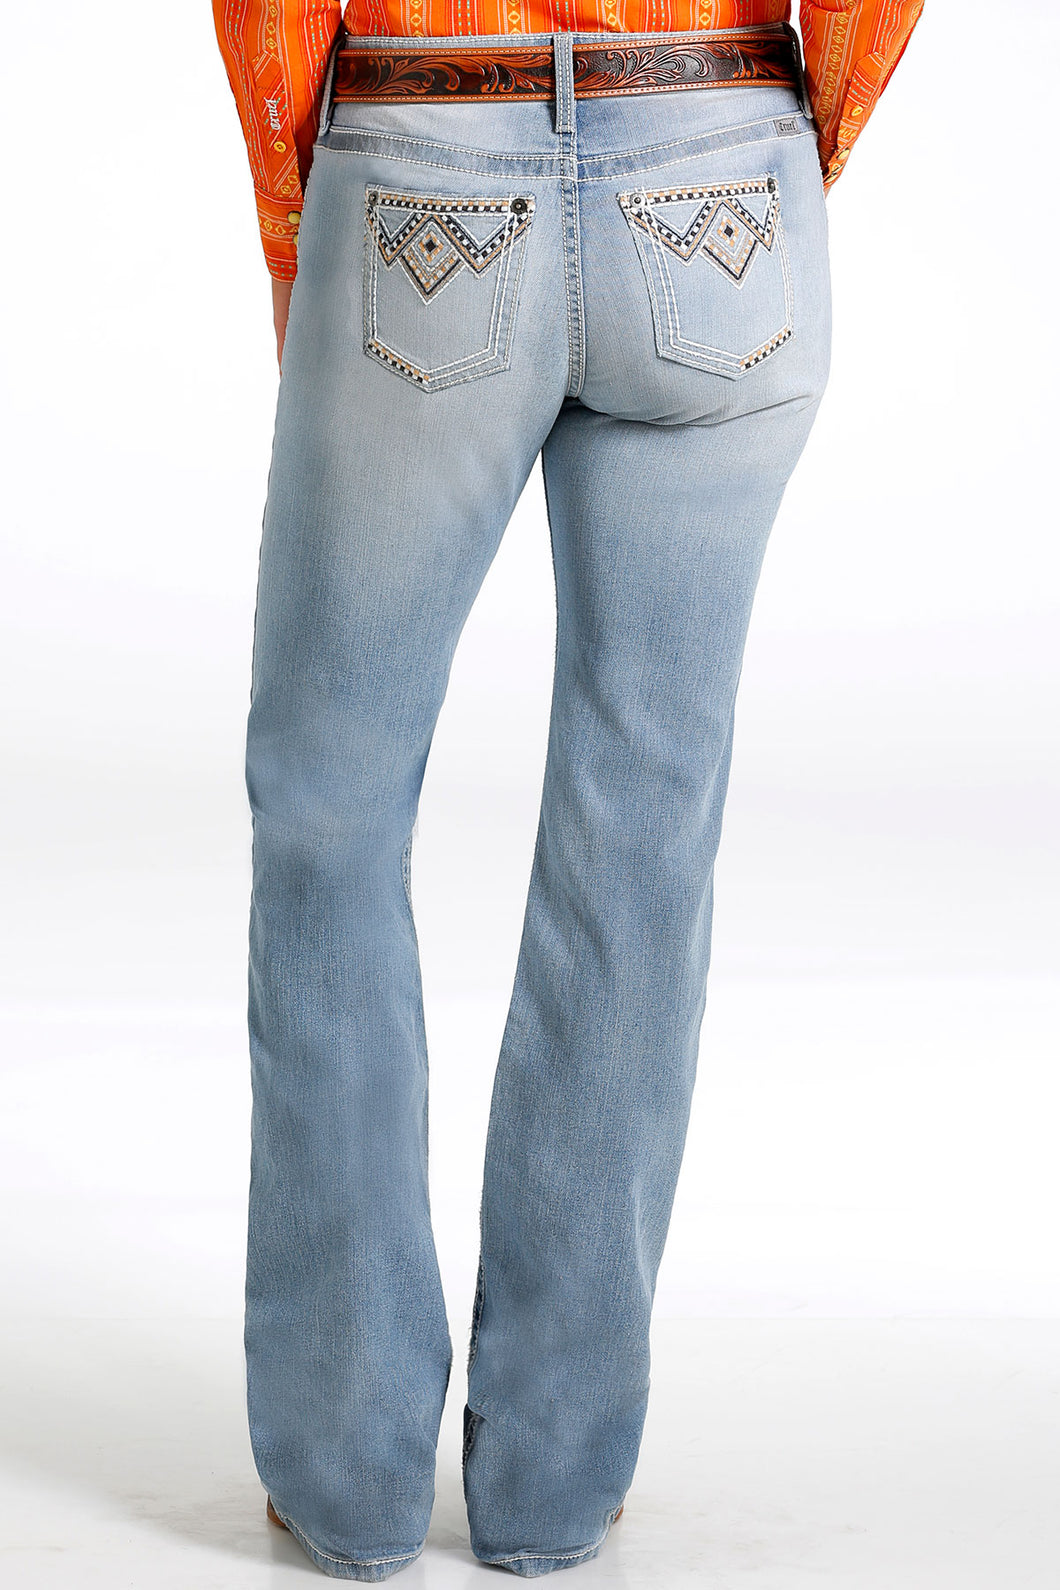 Women's True Shape Jeans, High-Rise Bootcut | Jeans at L.L.Bean